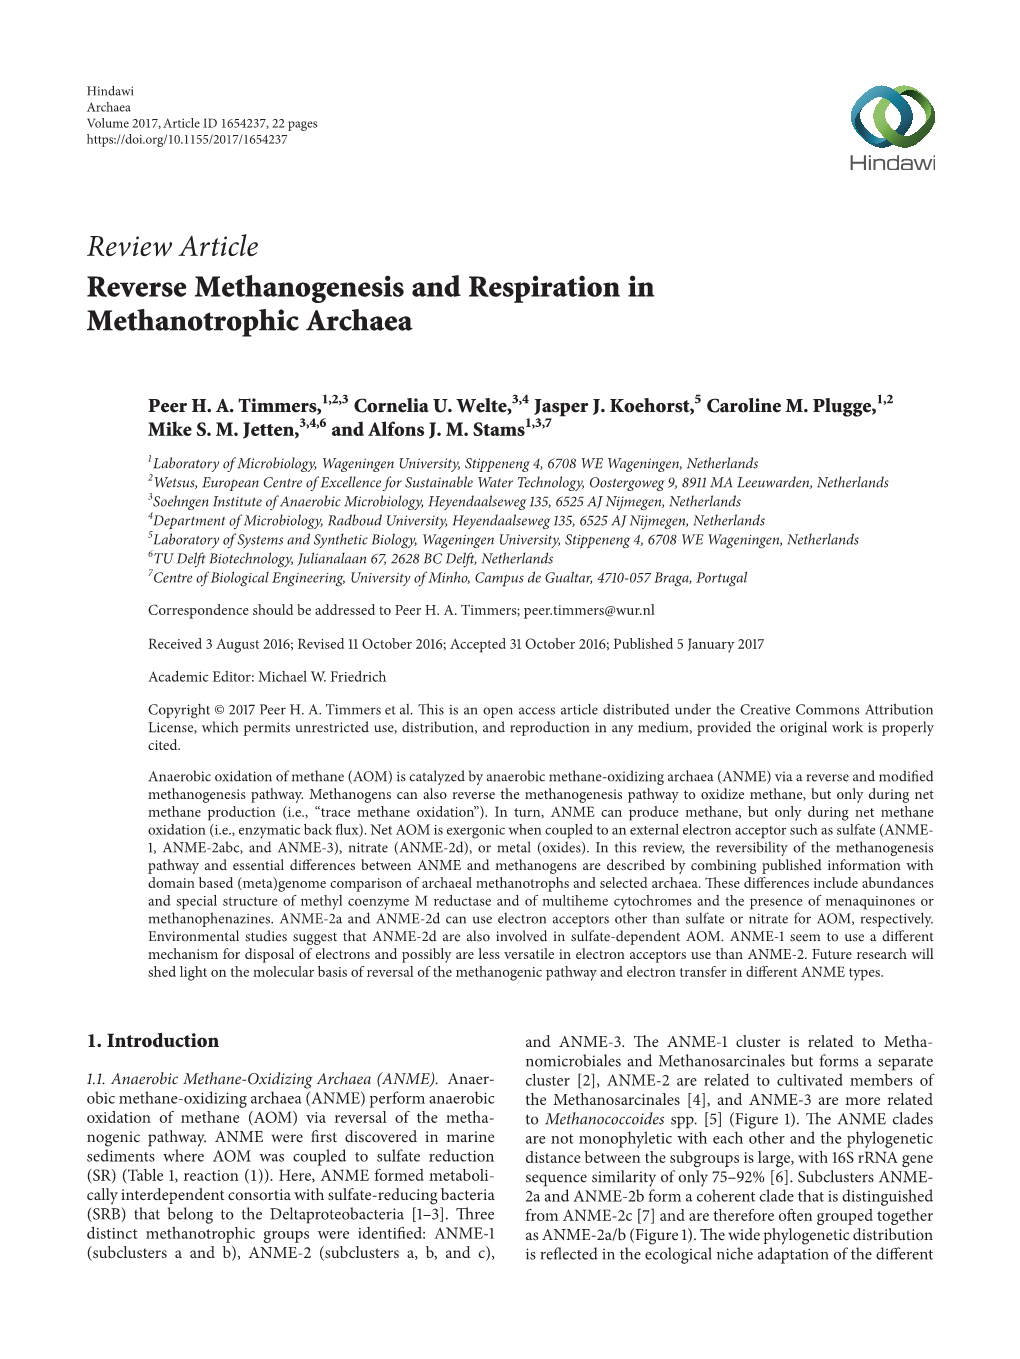 Reverse Methanogenesis and Respiration in Methanotrophic Archaea